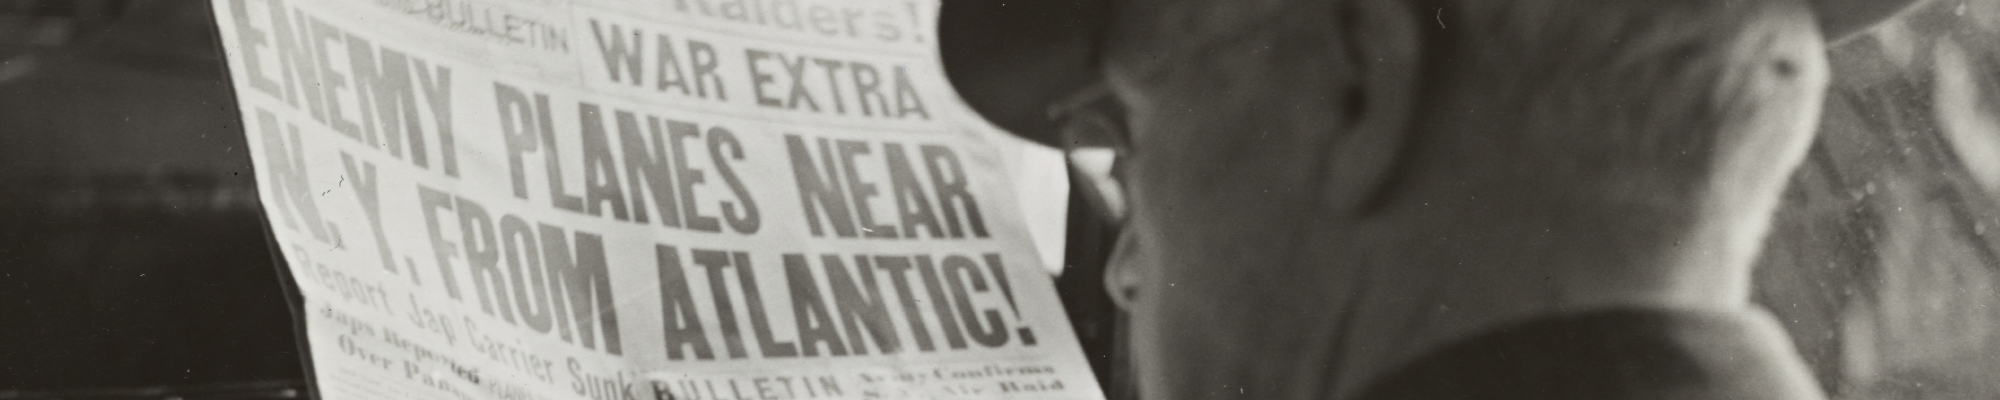 Man reading newspaper with headline war planes near NY